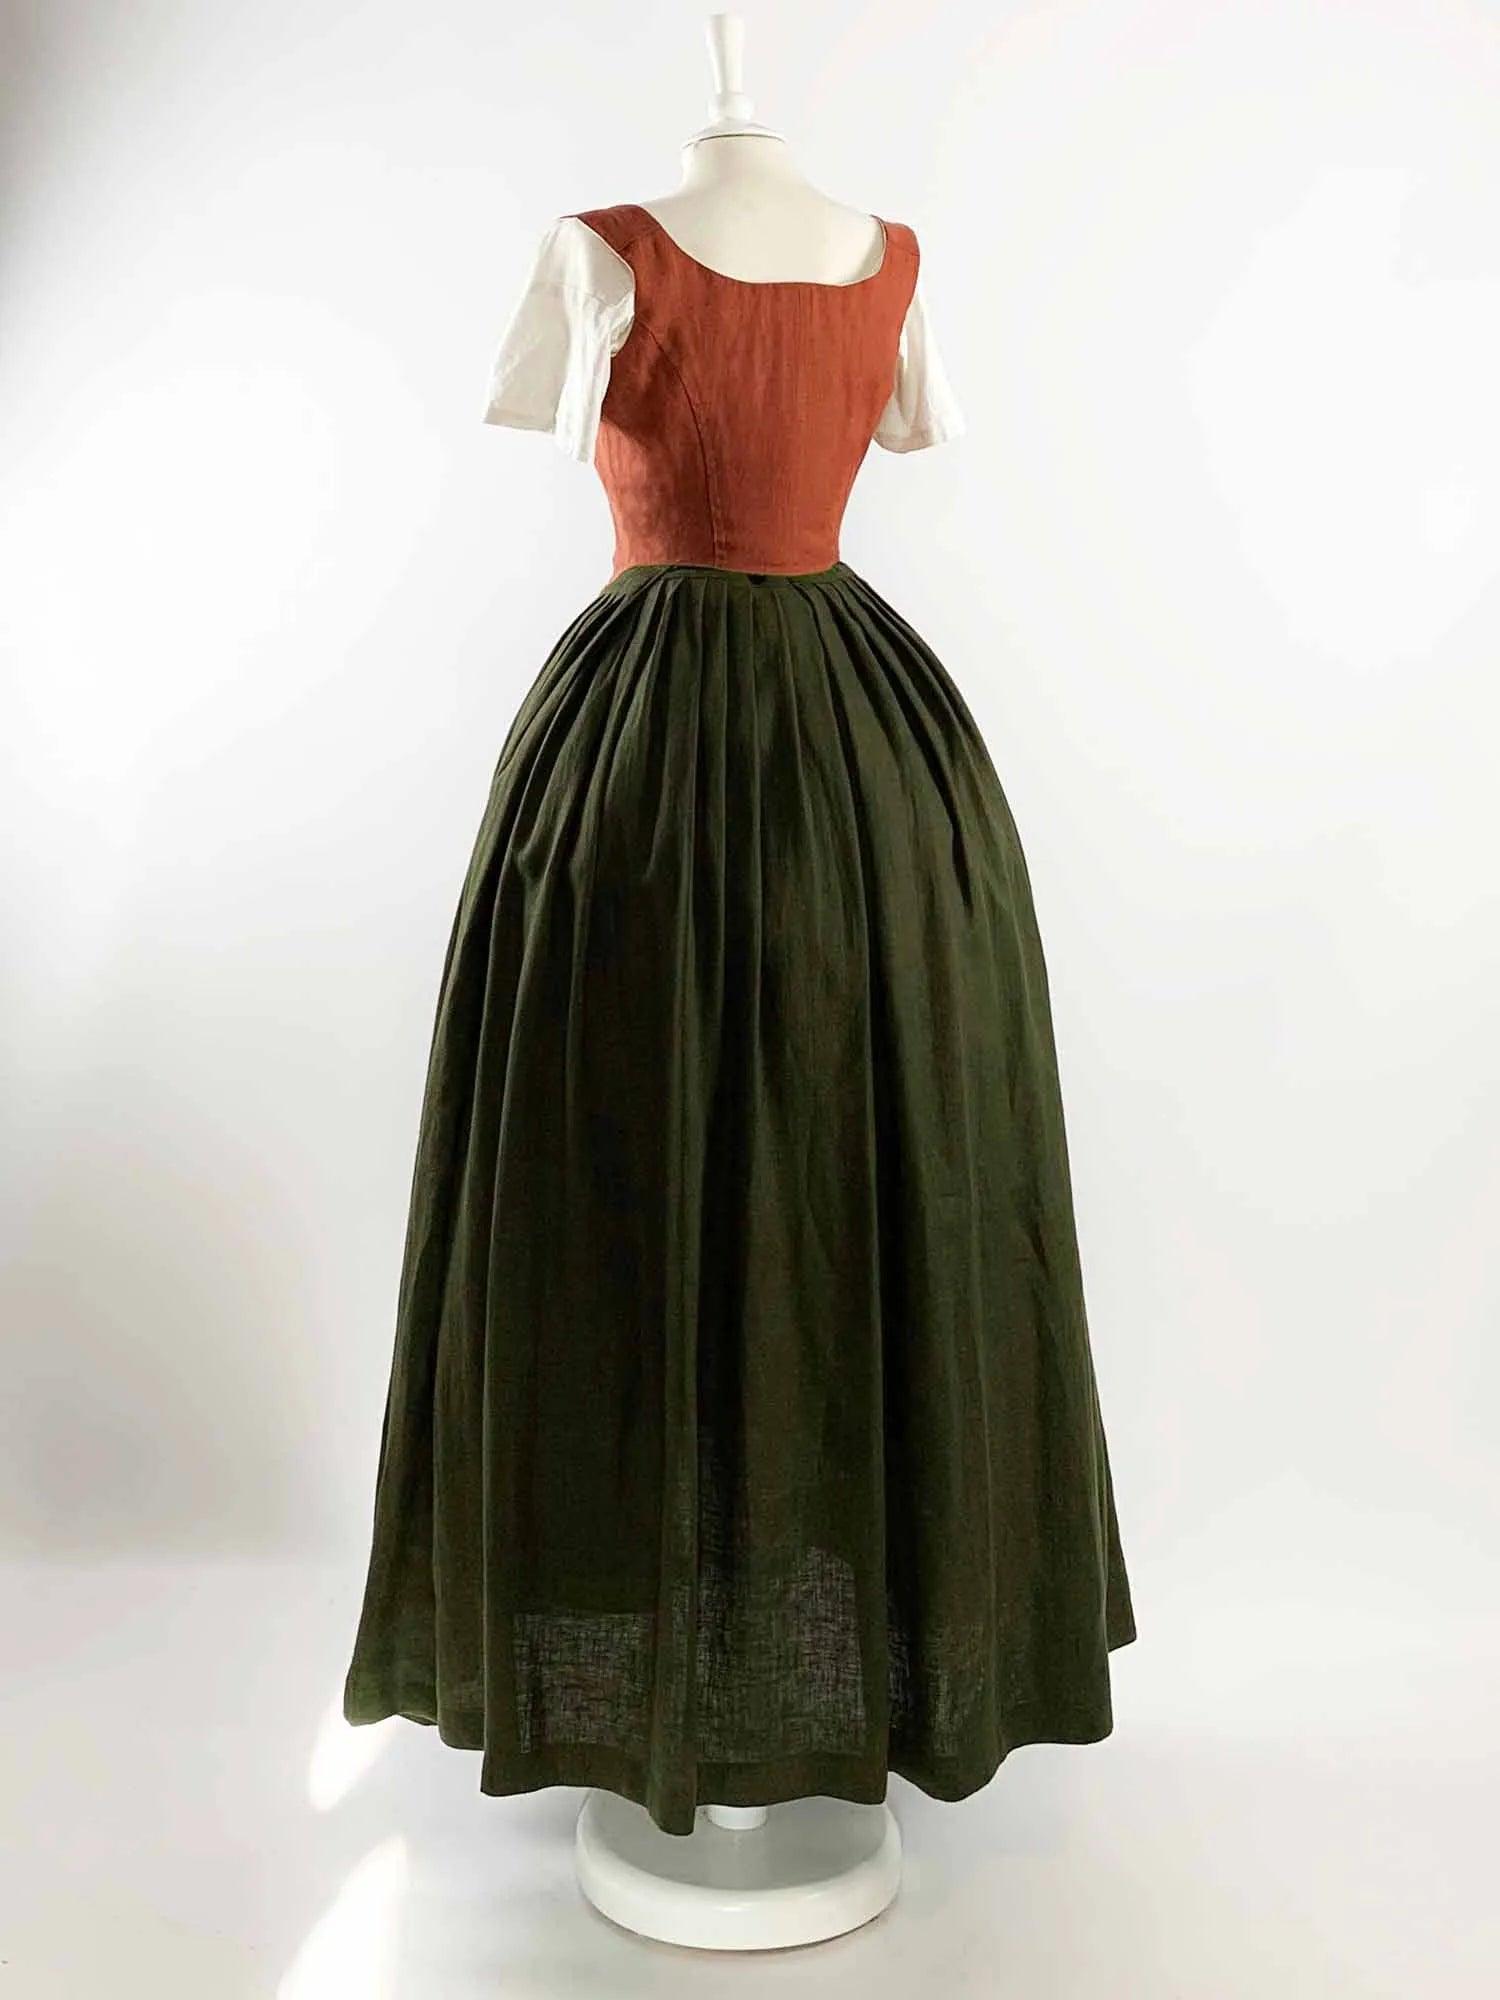 ISOLDE, Renaissance Costume in Rust Orange &amp; Moss Green Linen - Atelier Serraspina